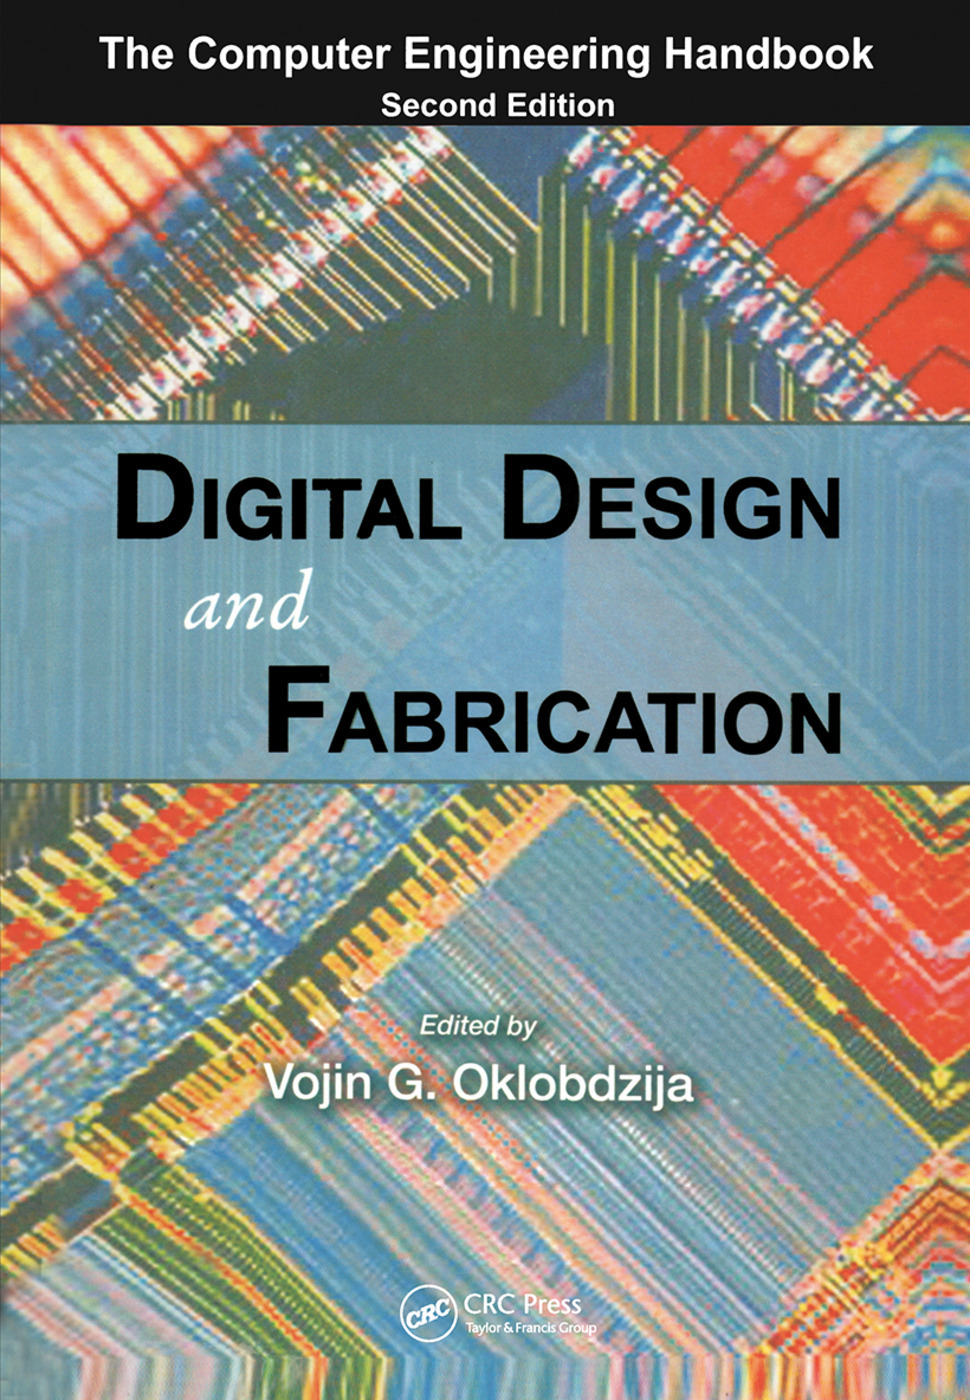 Digital Design and Fabrication by Vojin G. Oklobdzija